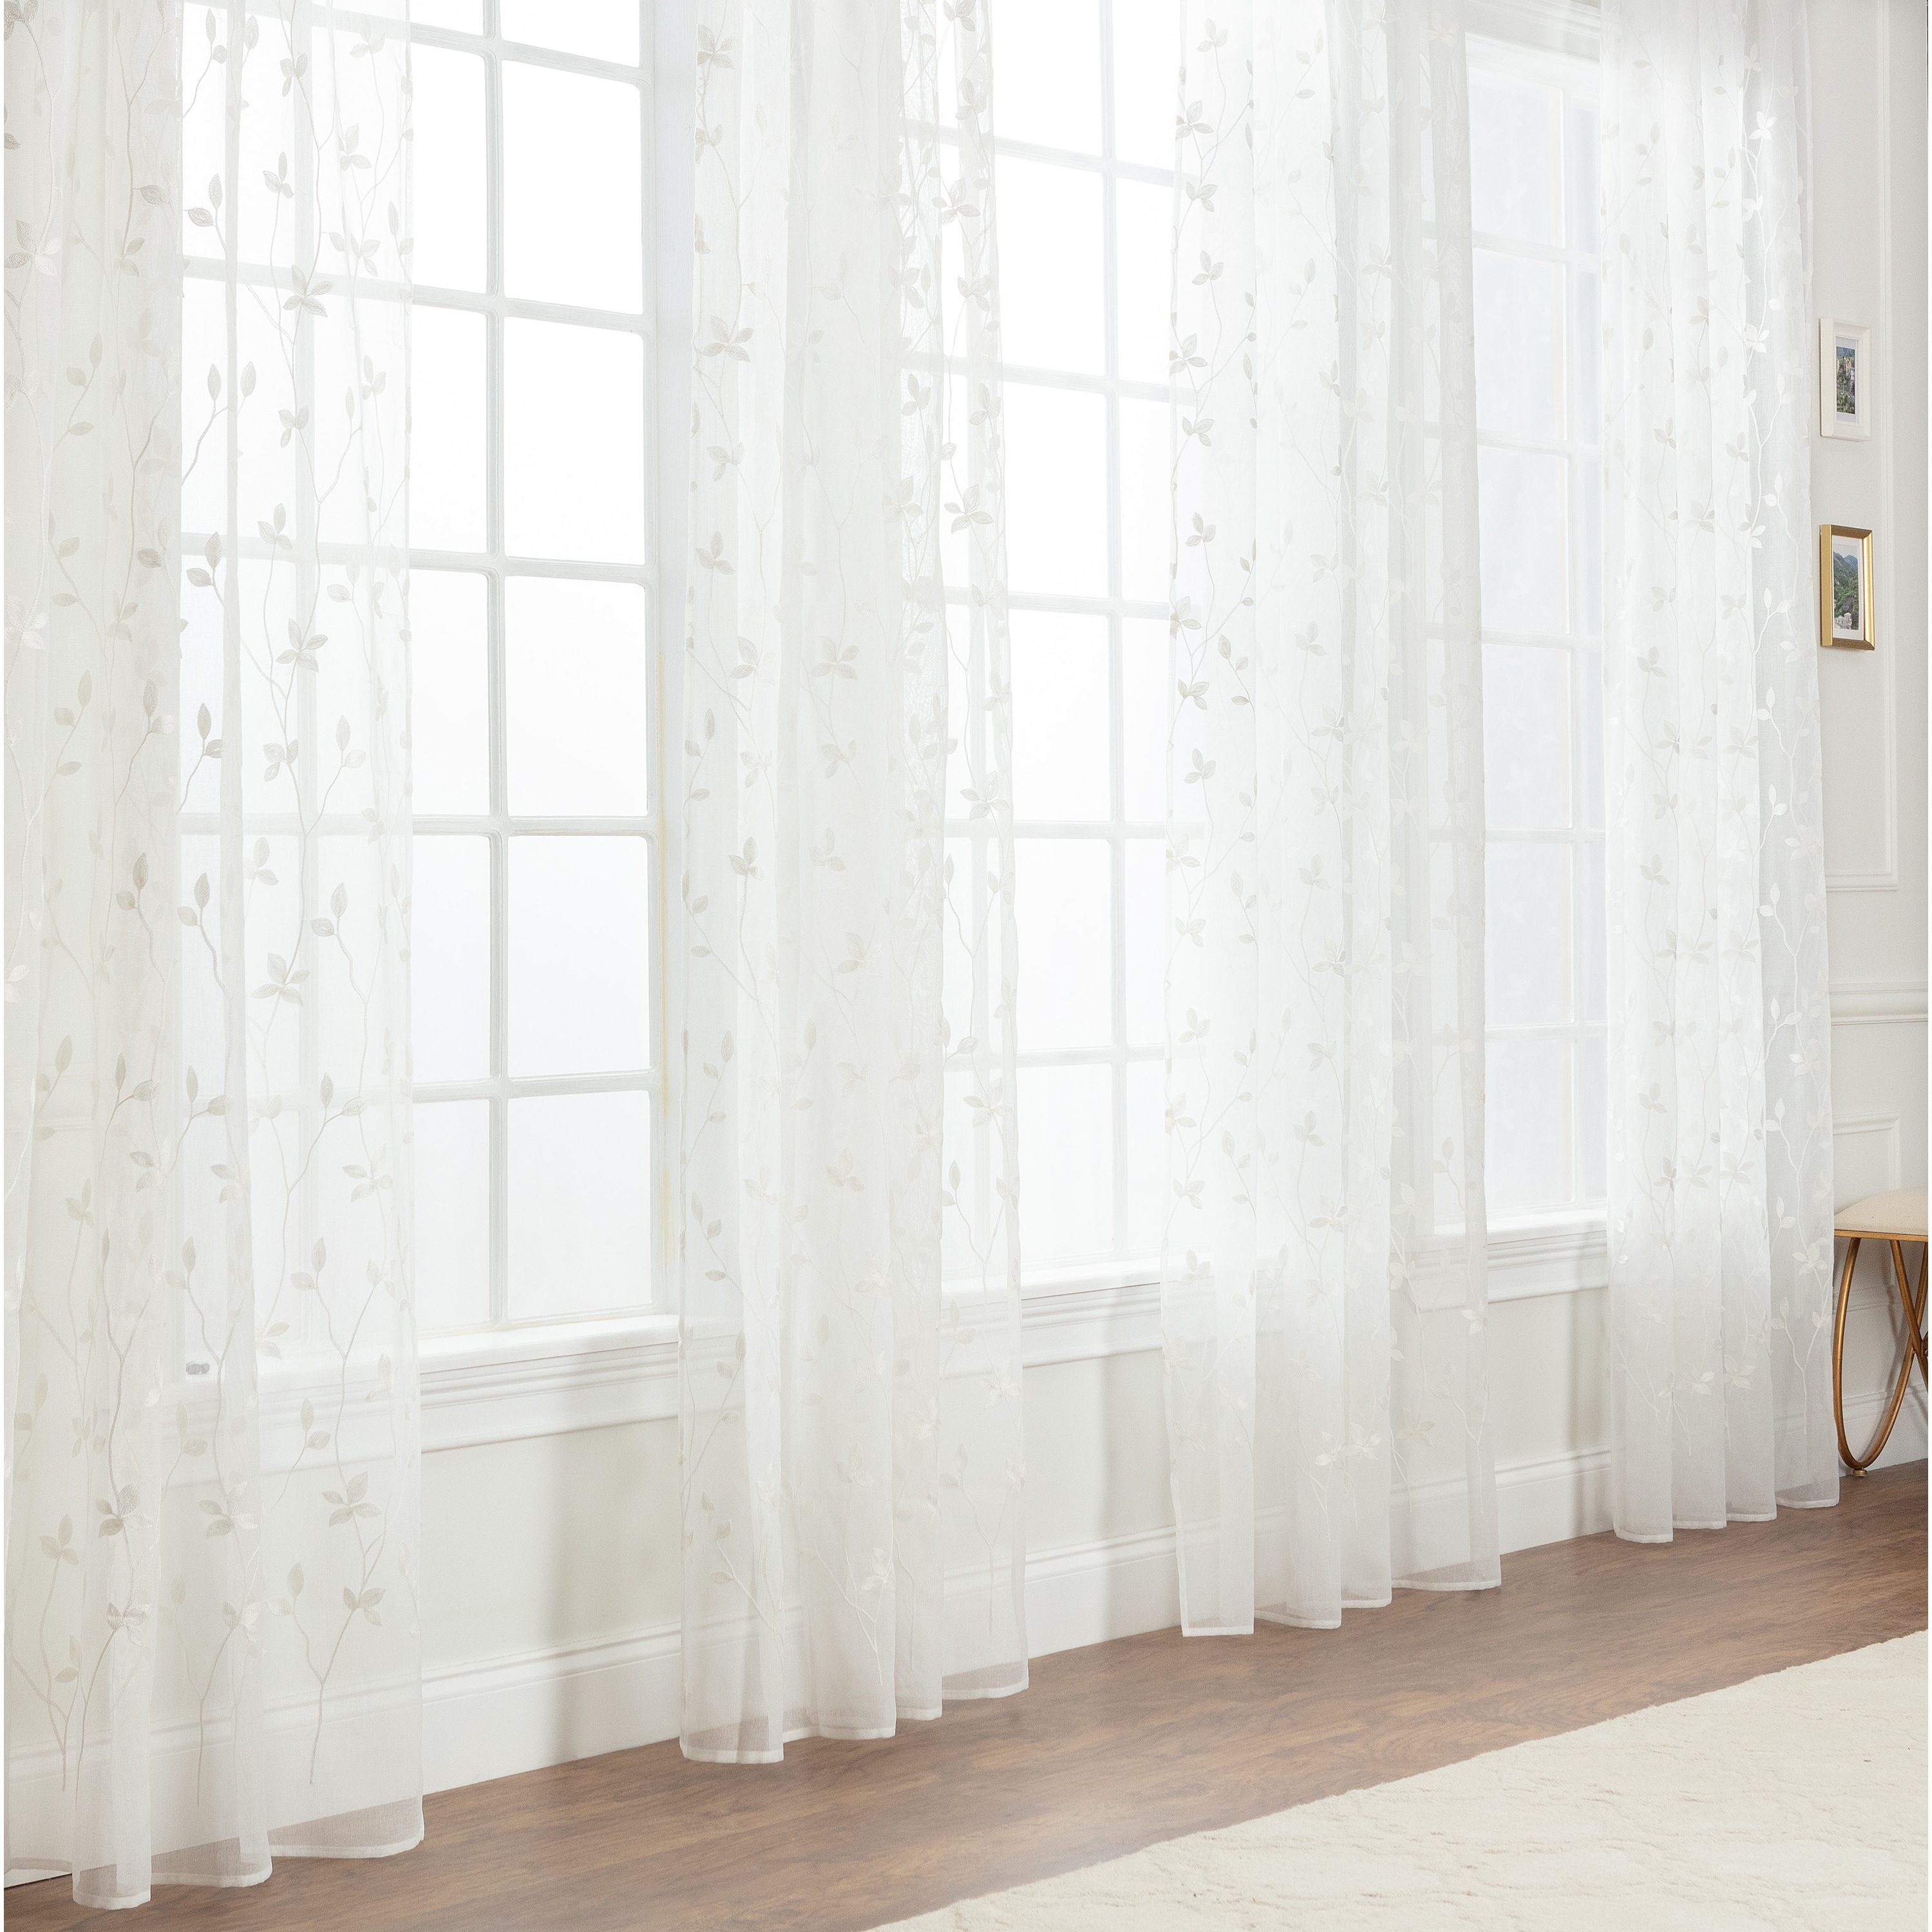 Chanasya Embroidered Vine Kitchen Bedroom Sheer Window Curtain Panel Pair (Set of 2)